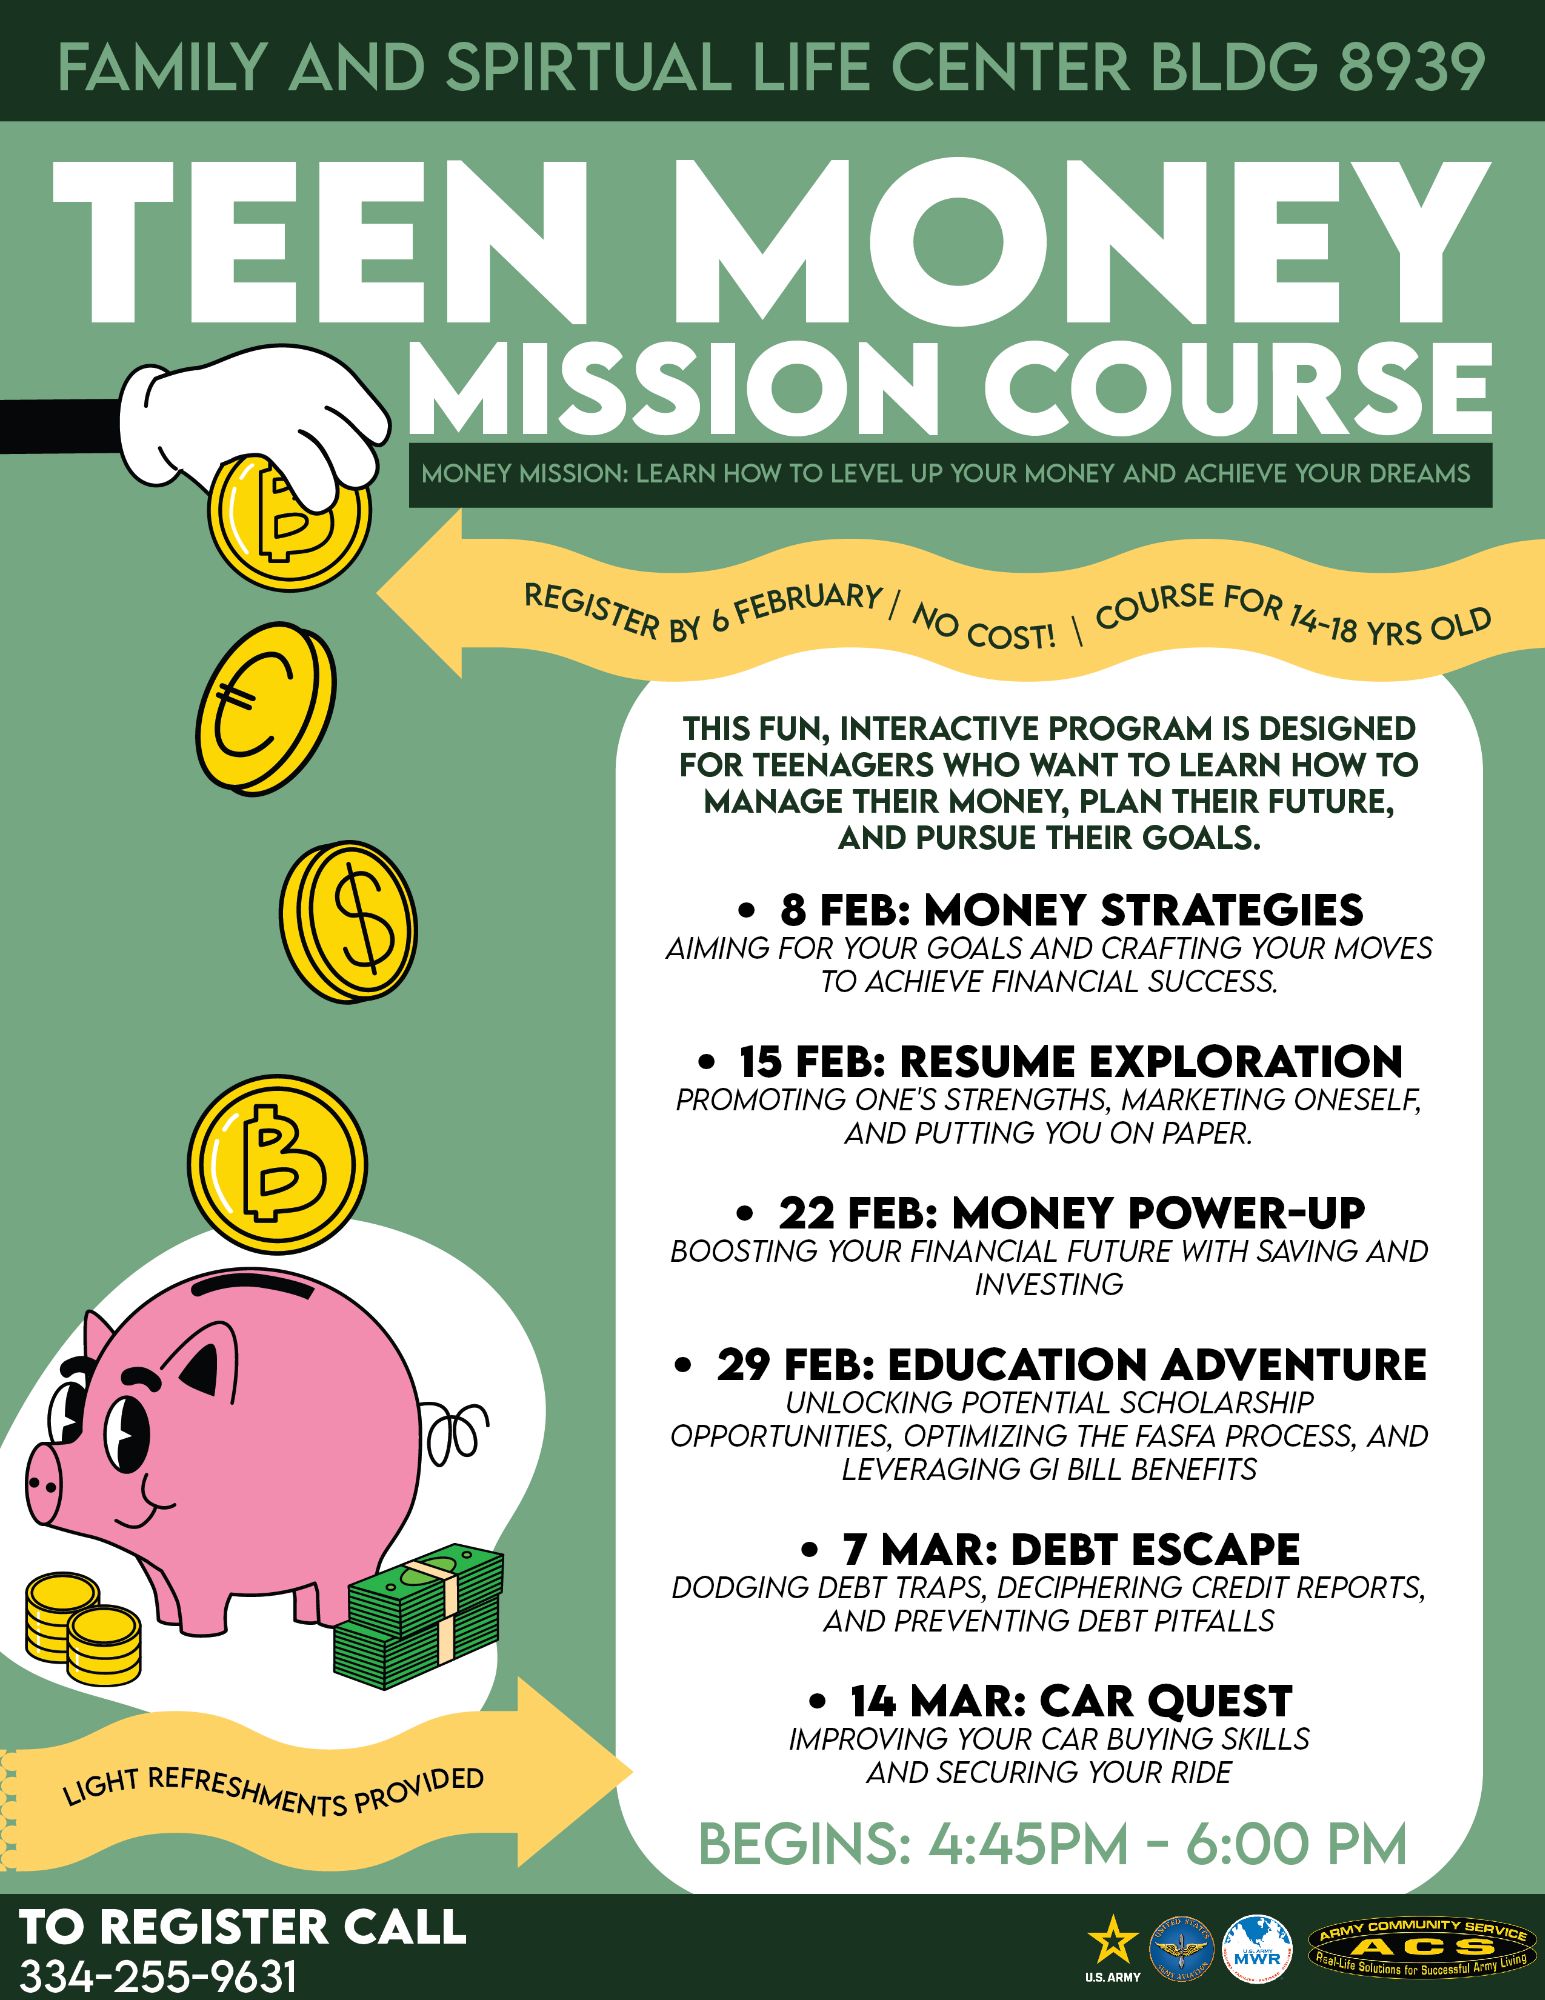 Teen_Money_Mission_Course.jpg